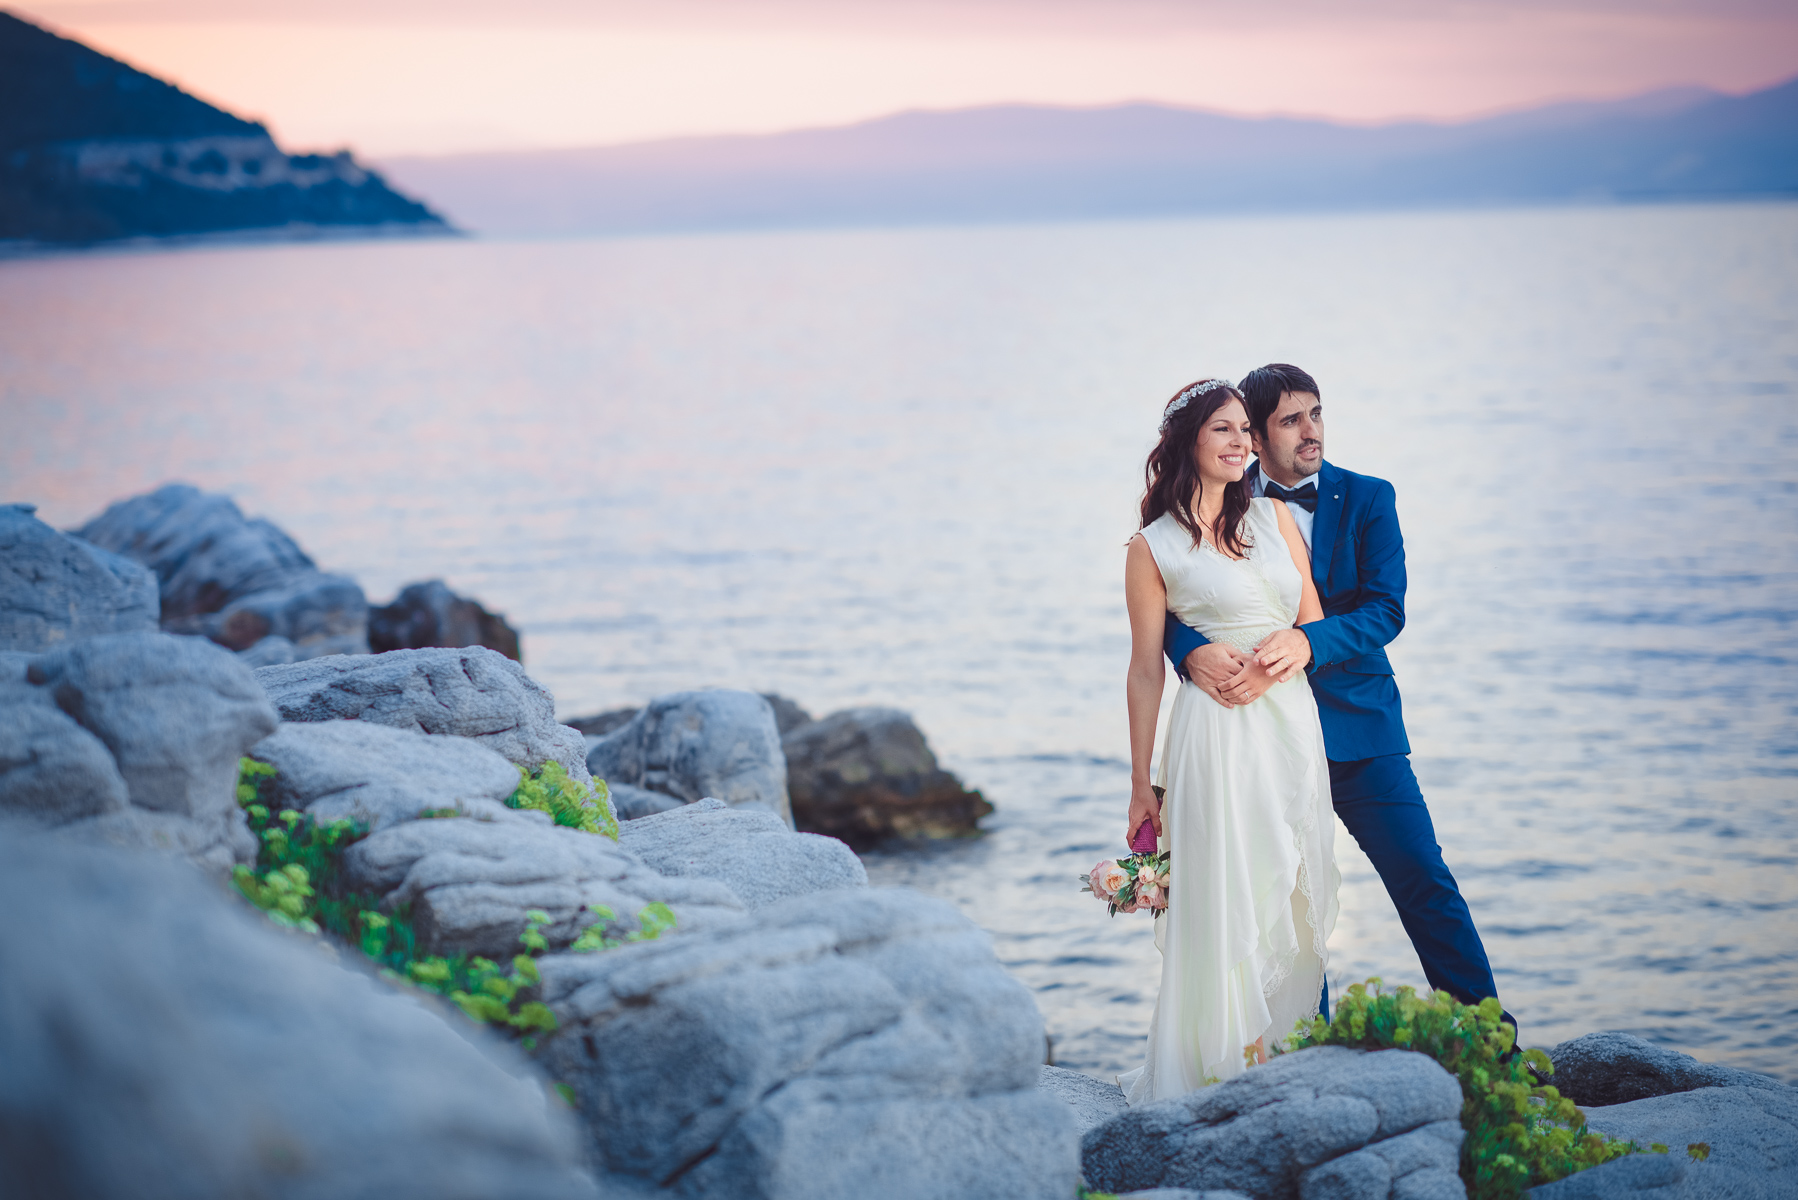 Destination wedding photographer Greece – Beach wedding in Thassos